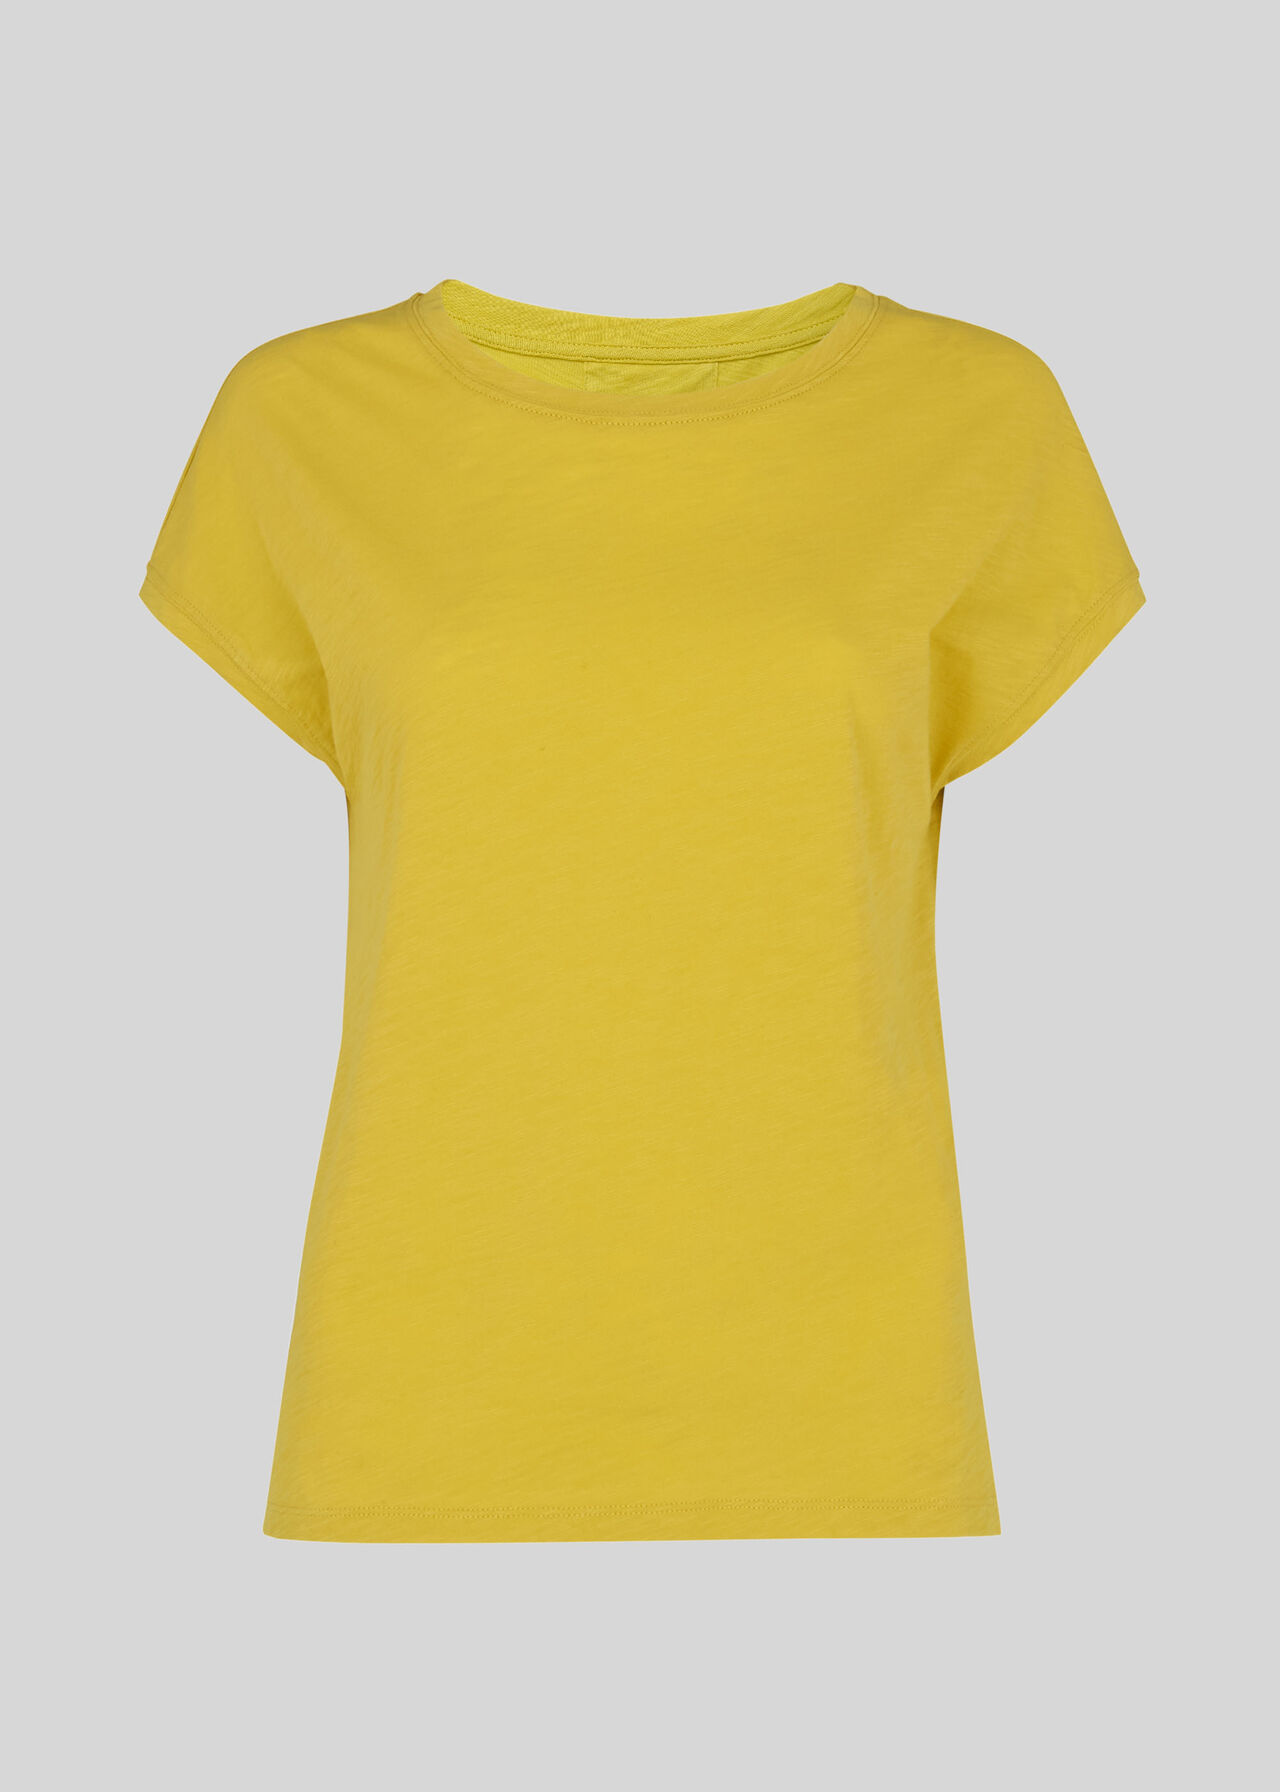 Yellow Minimal Cap Sleeve Tee | WHISTLES